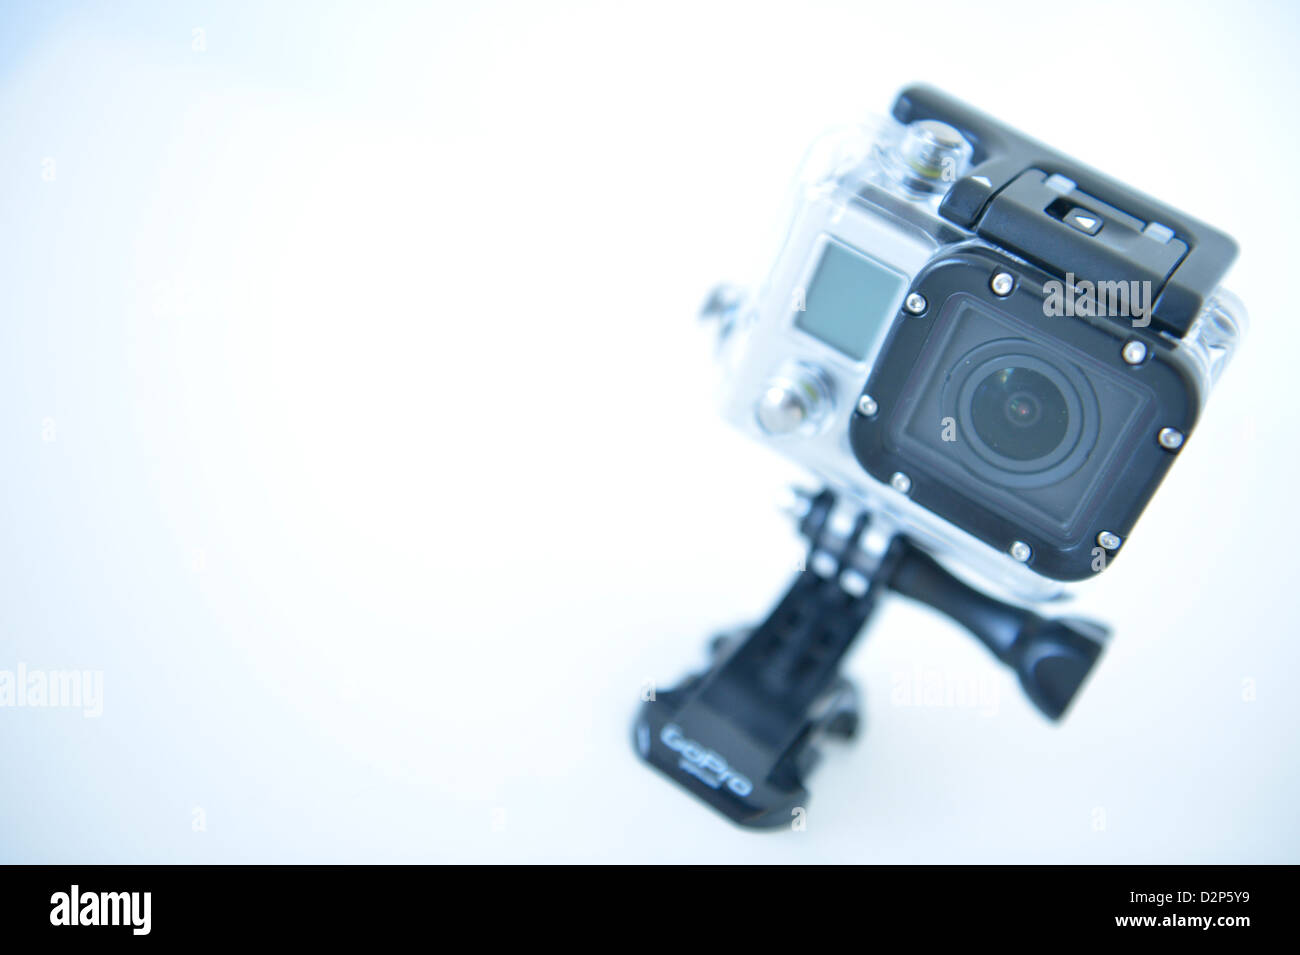 GoPro Hero 3 Black Edition camera with waterproof casing Stock Photo